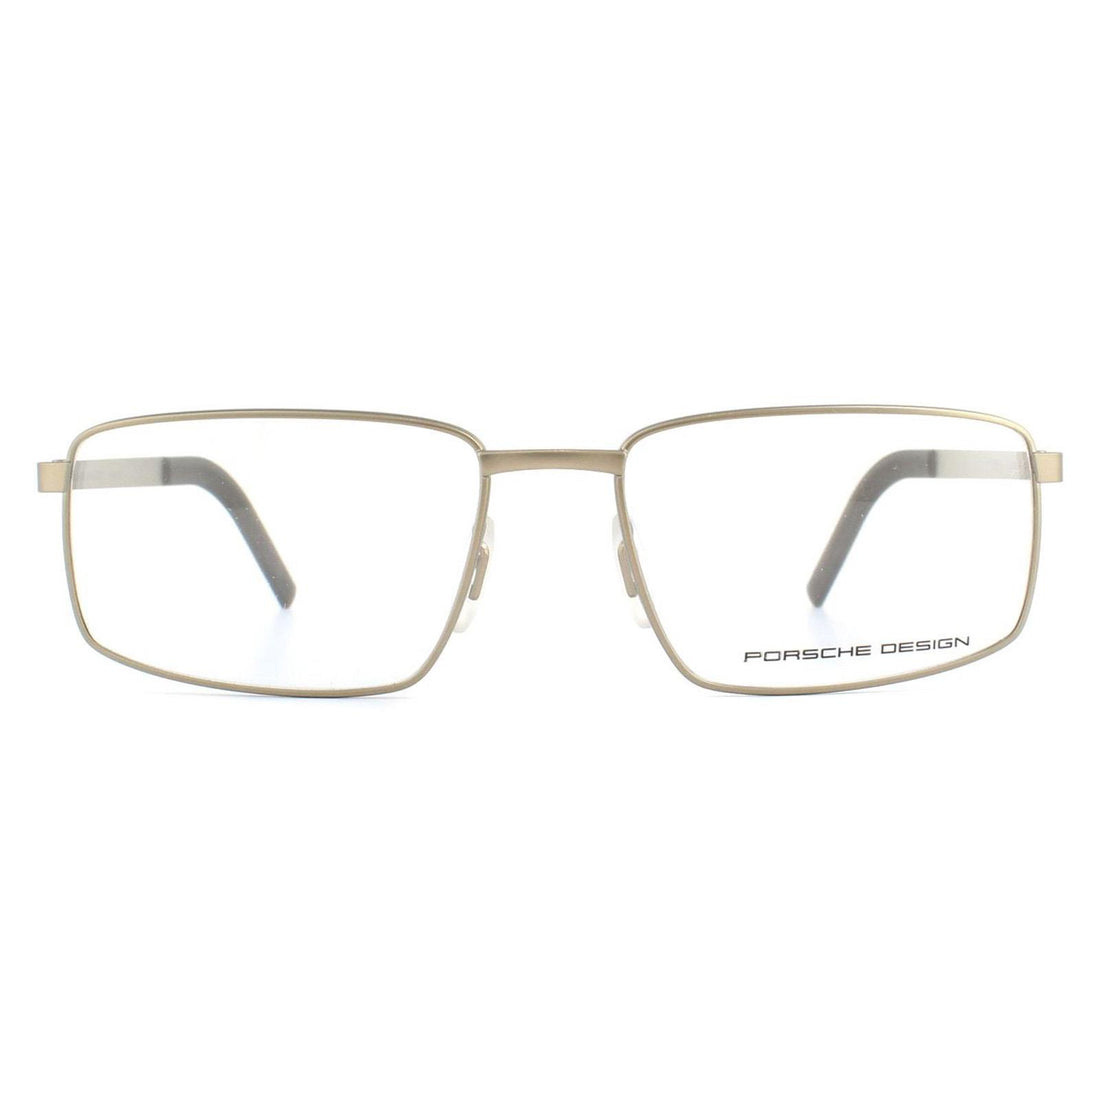 Porsche Design Glasses Frames P8314 D Light Gold 55mm